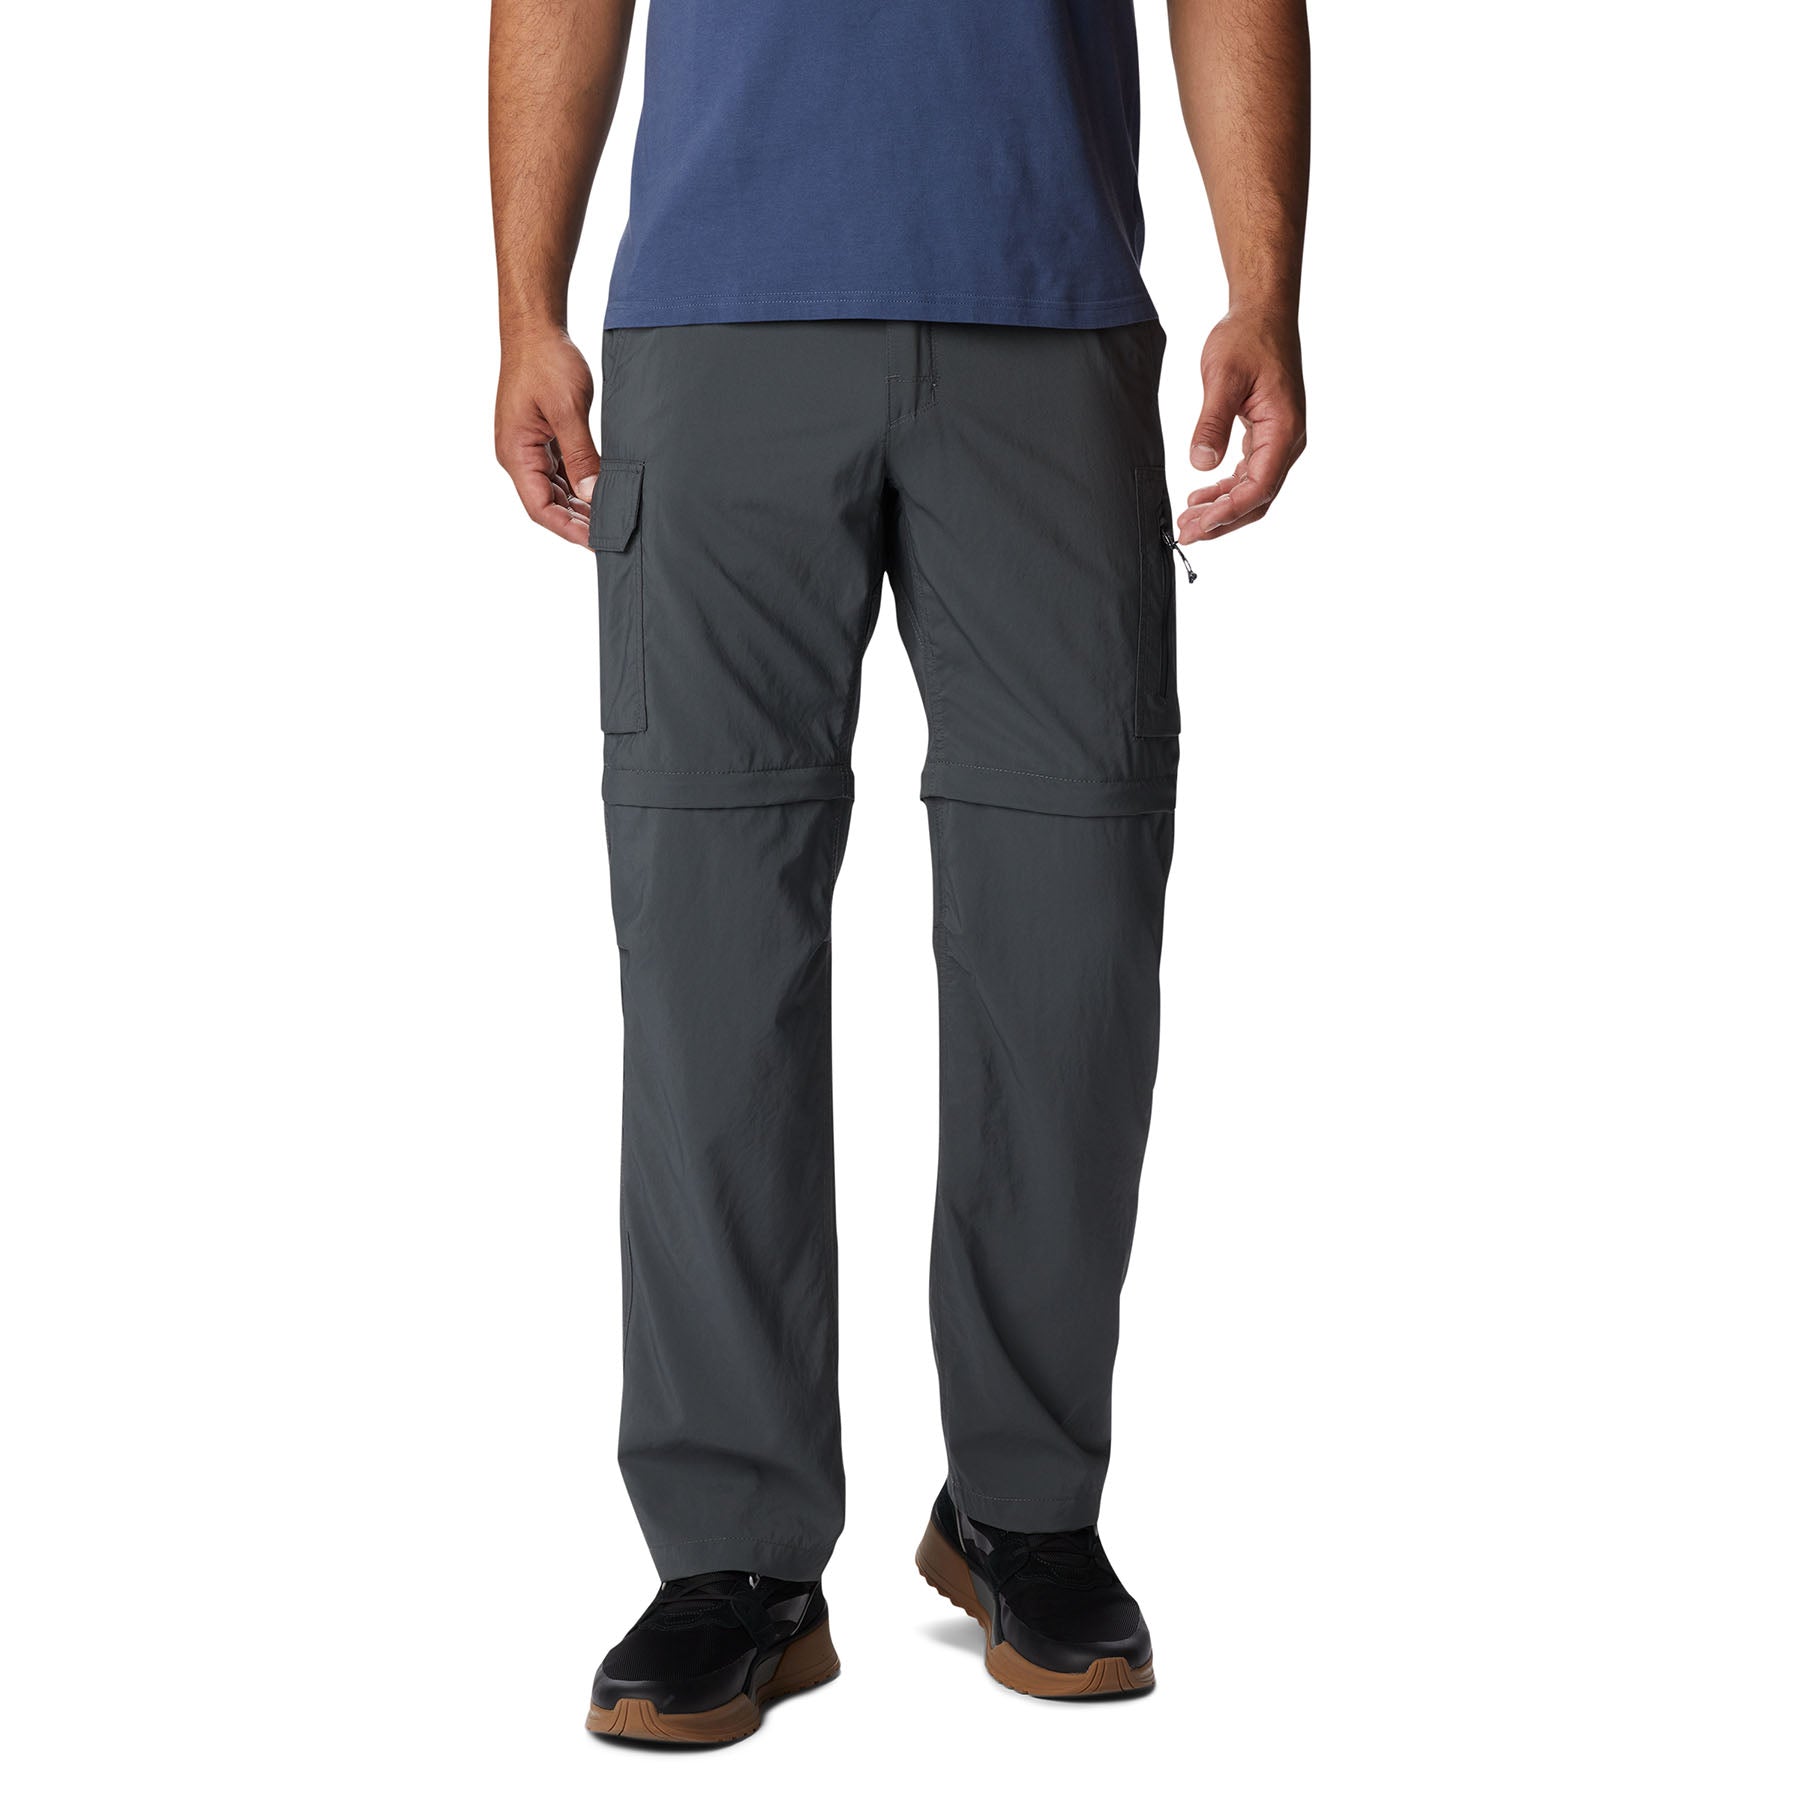 Buy Navy Trousers  Pants for Men by Columbia Online  Ajiocom